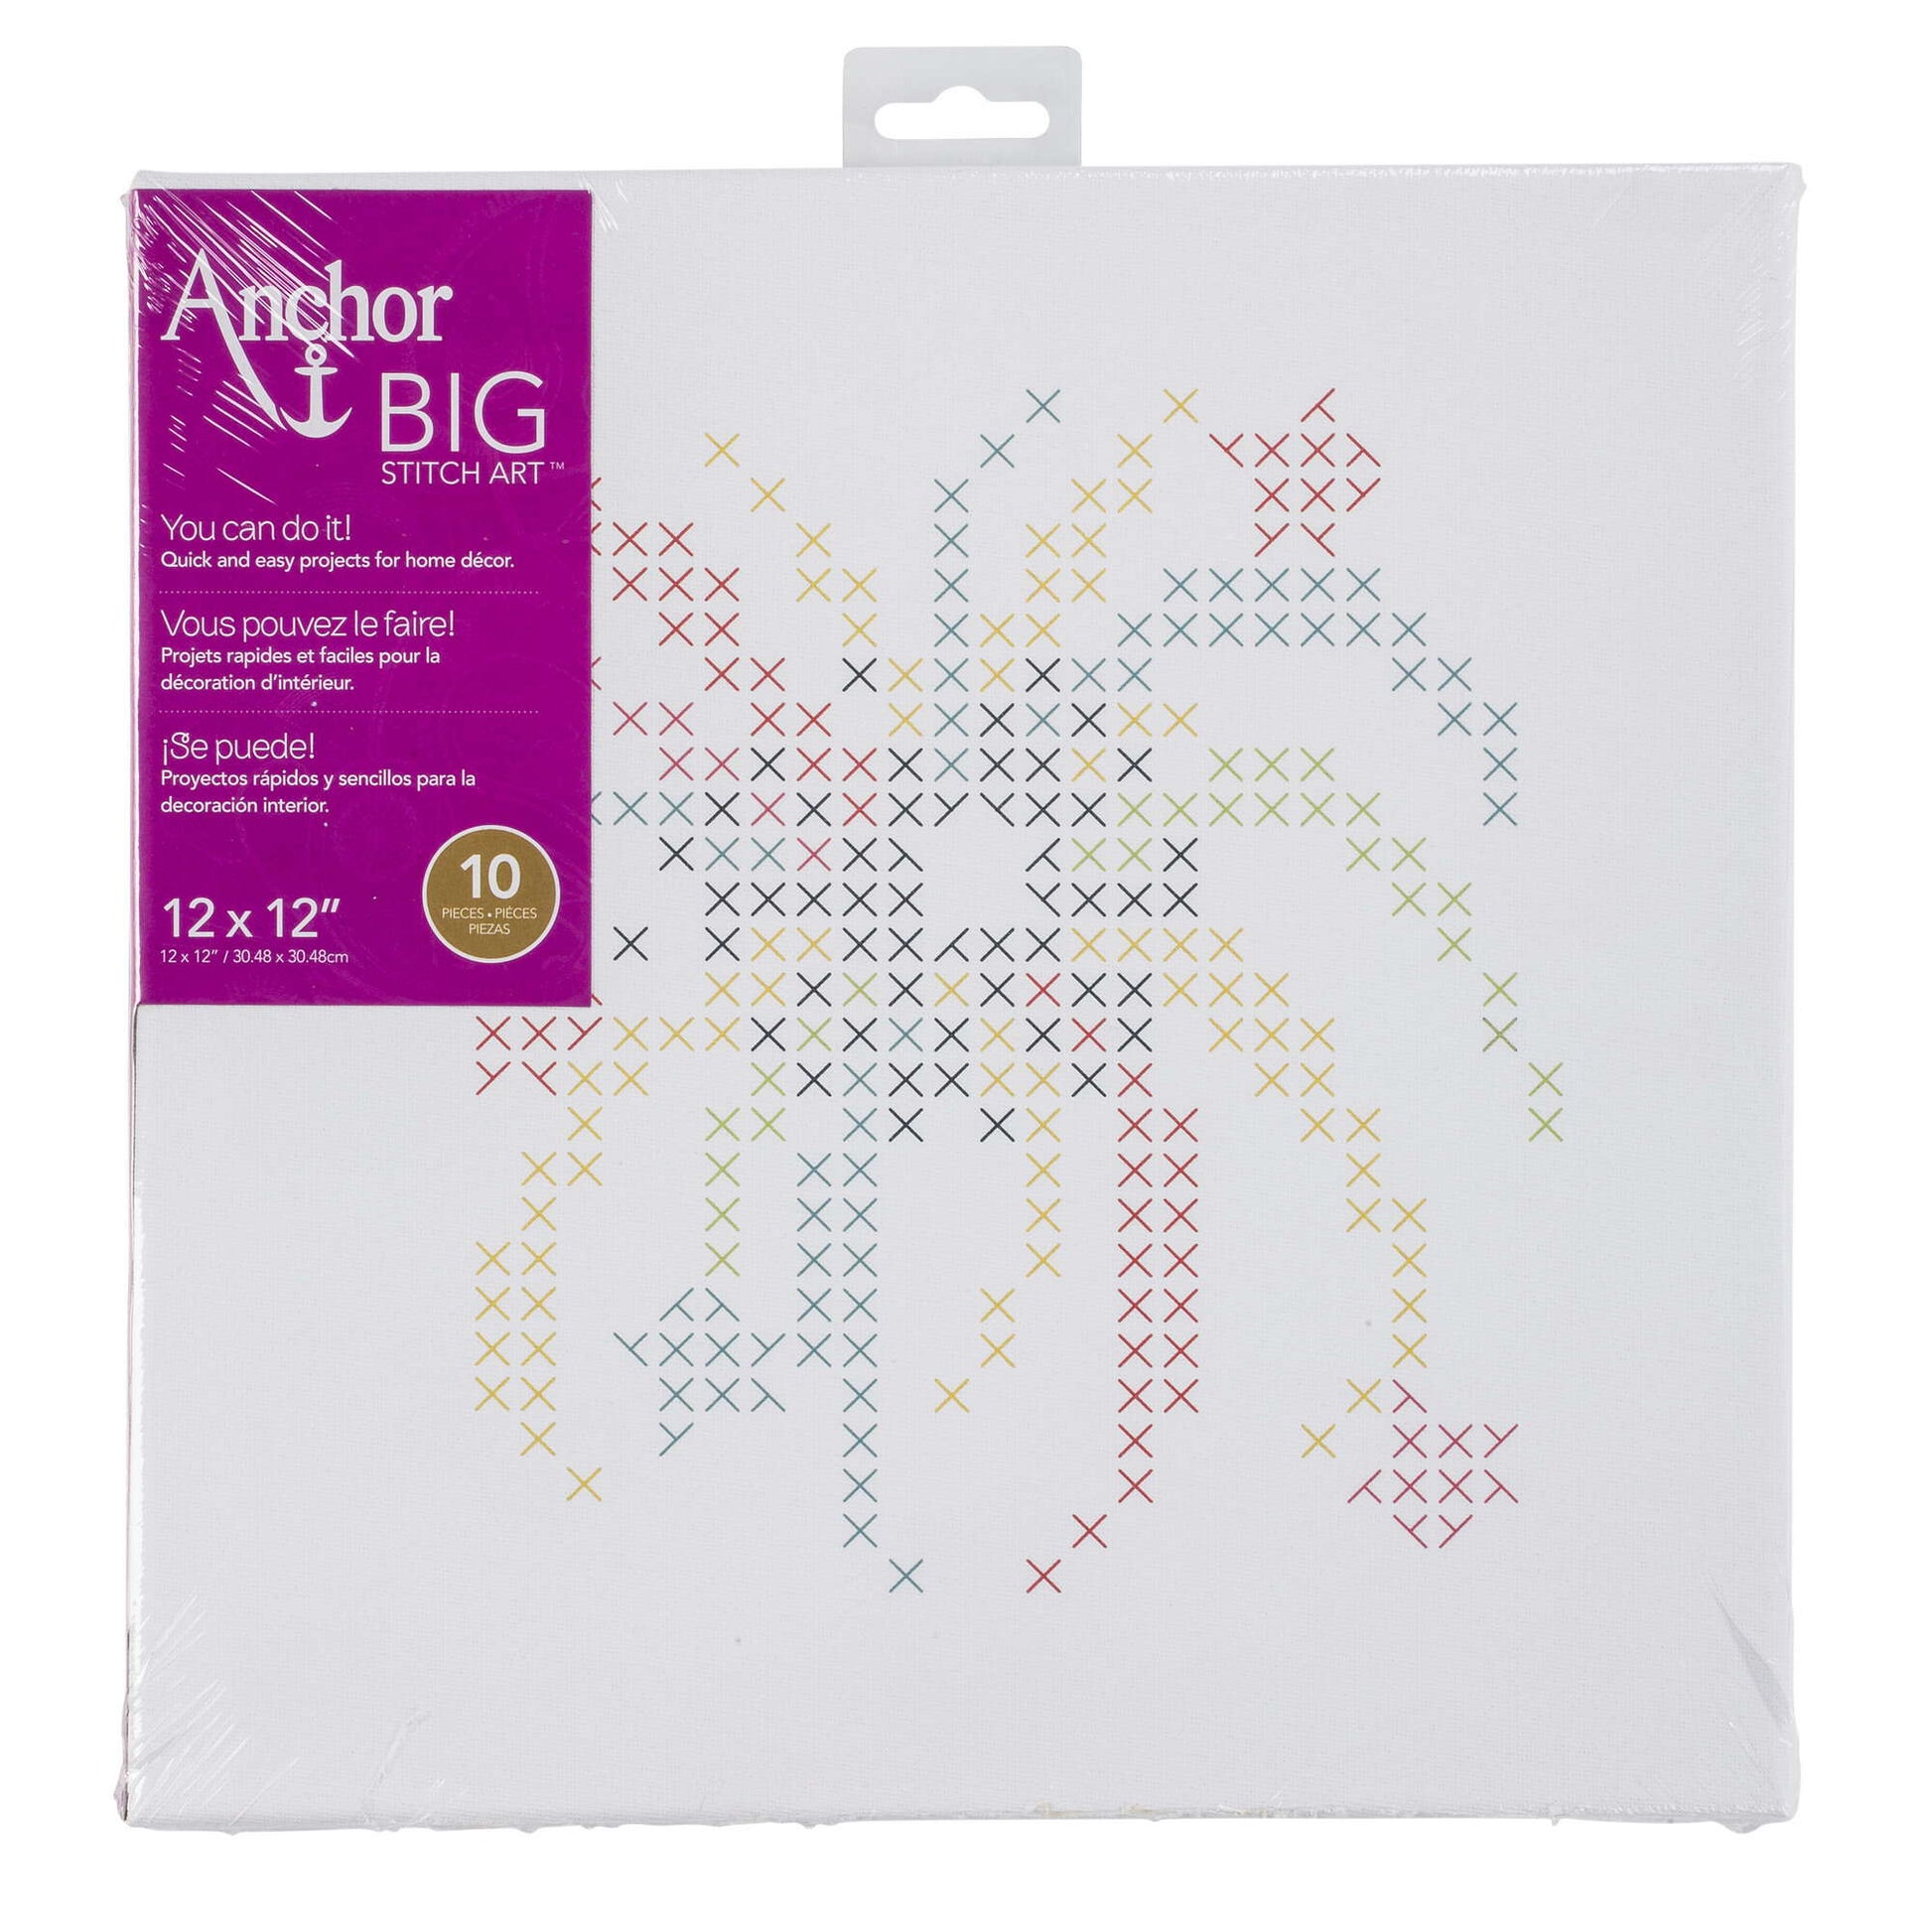 Anchor Big Stitch Art 12" x 12" - Clearance Items Fireworks